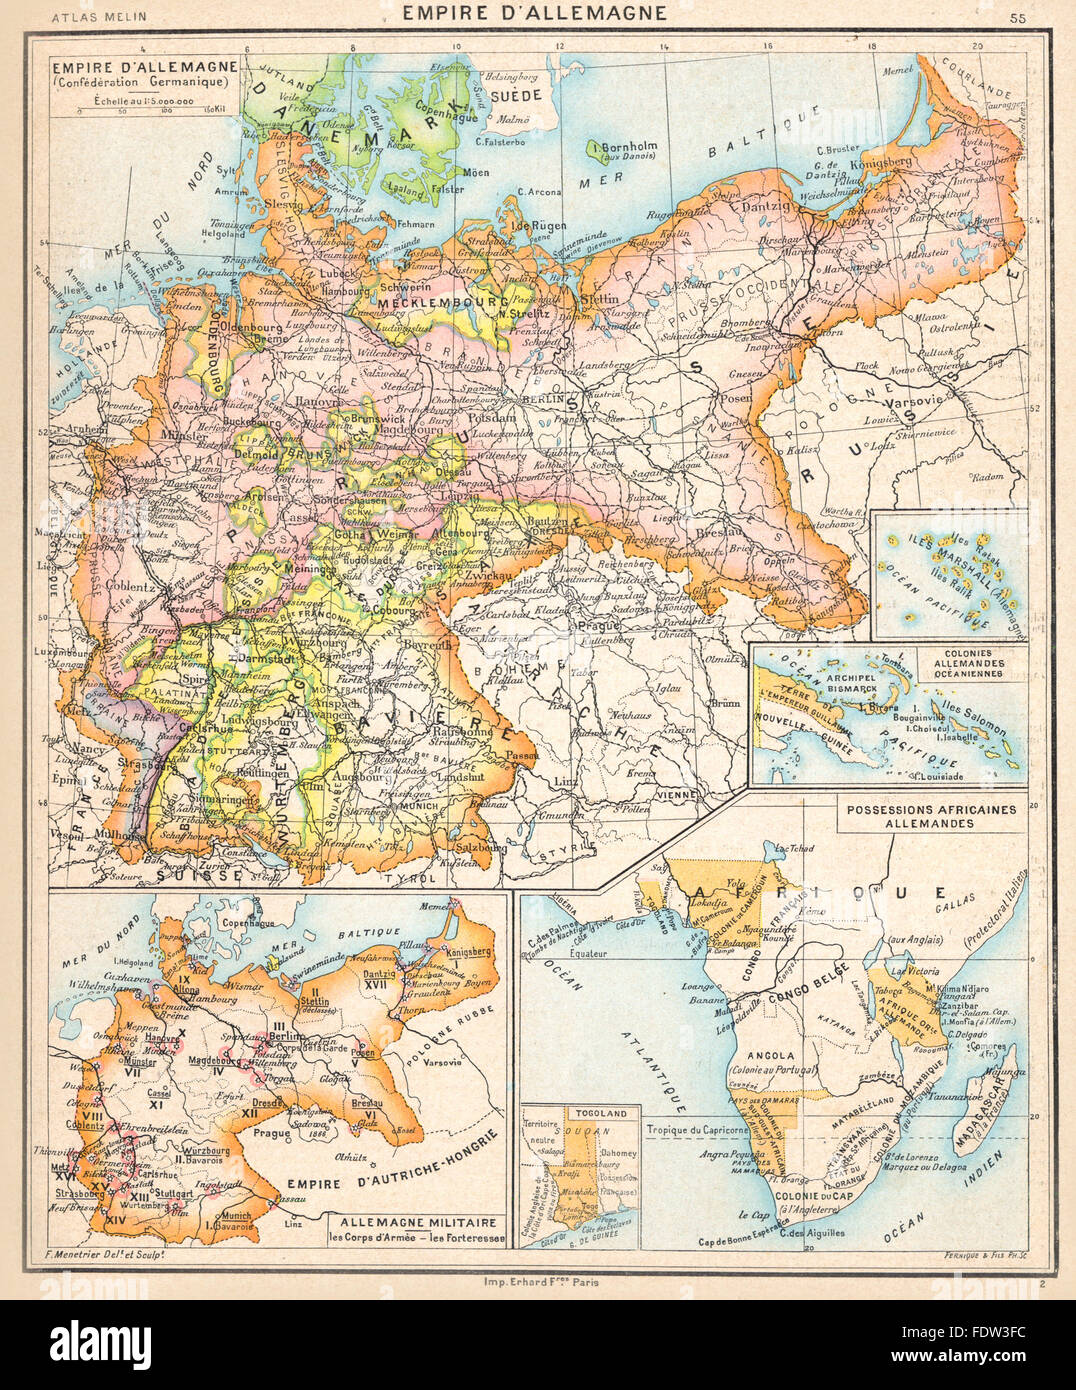 Alemania: Empire Allemagne Militaire colonias Africaines Togoland, 1900 viejo mapa Foto de stock